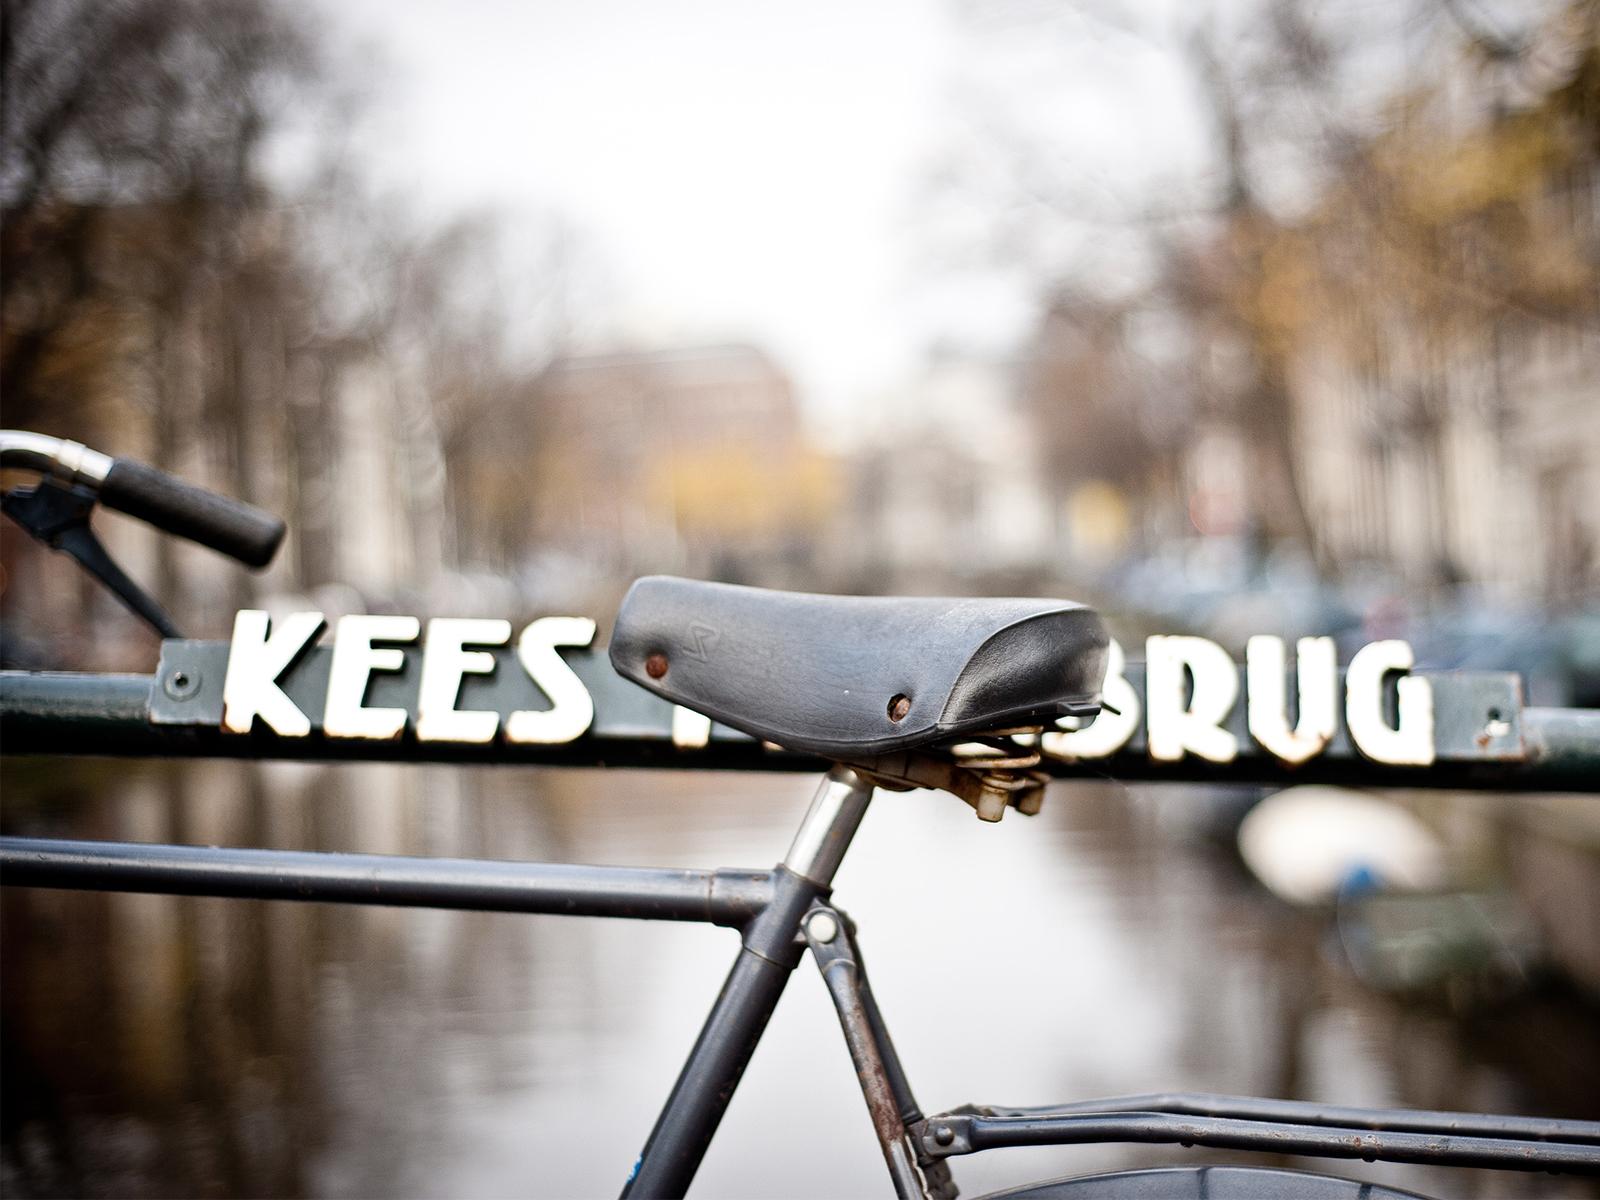 Amsterdam Kees Fensbrug